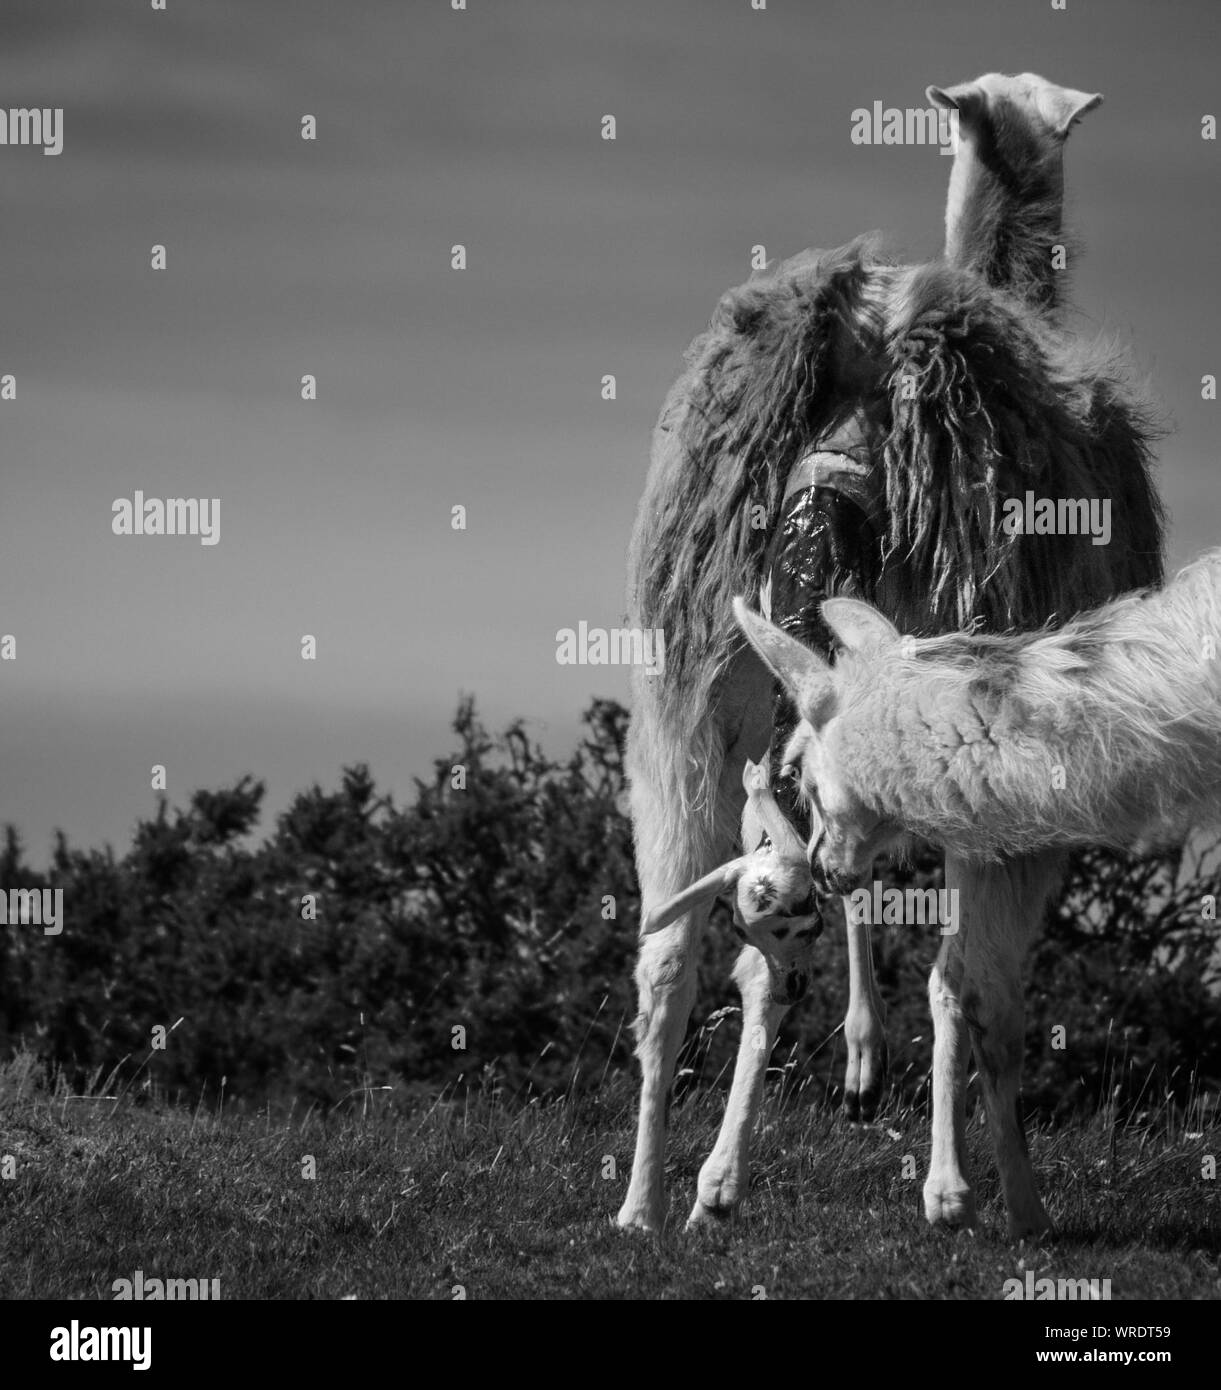 Llama Giving Birth On Field Stock Photo